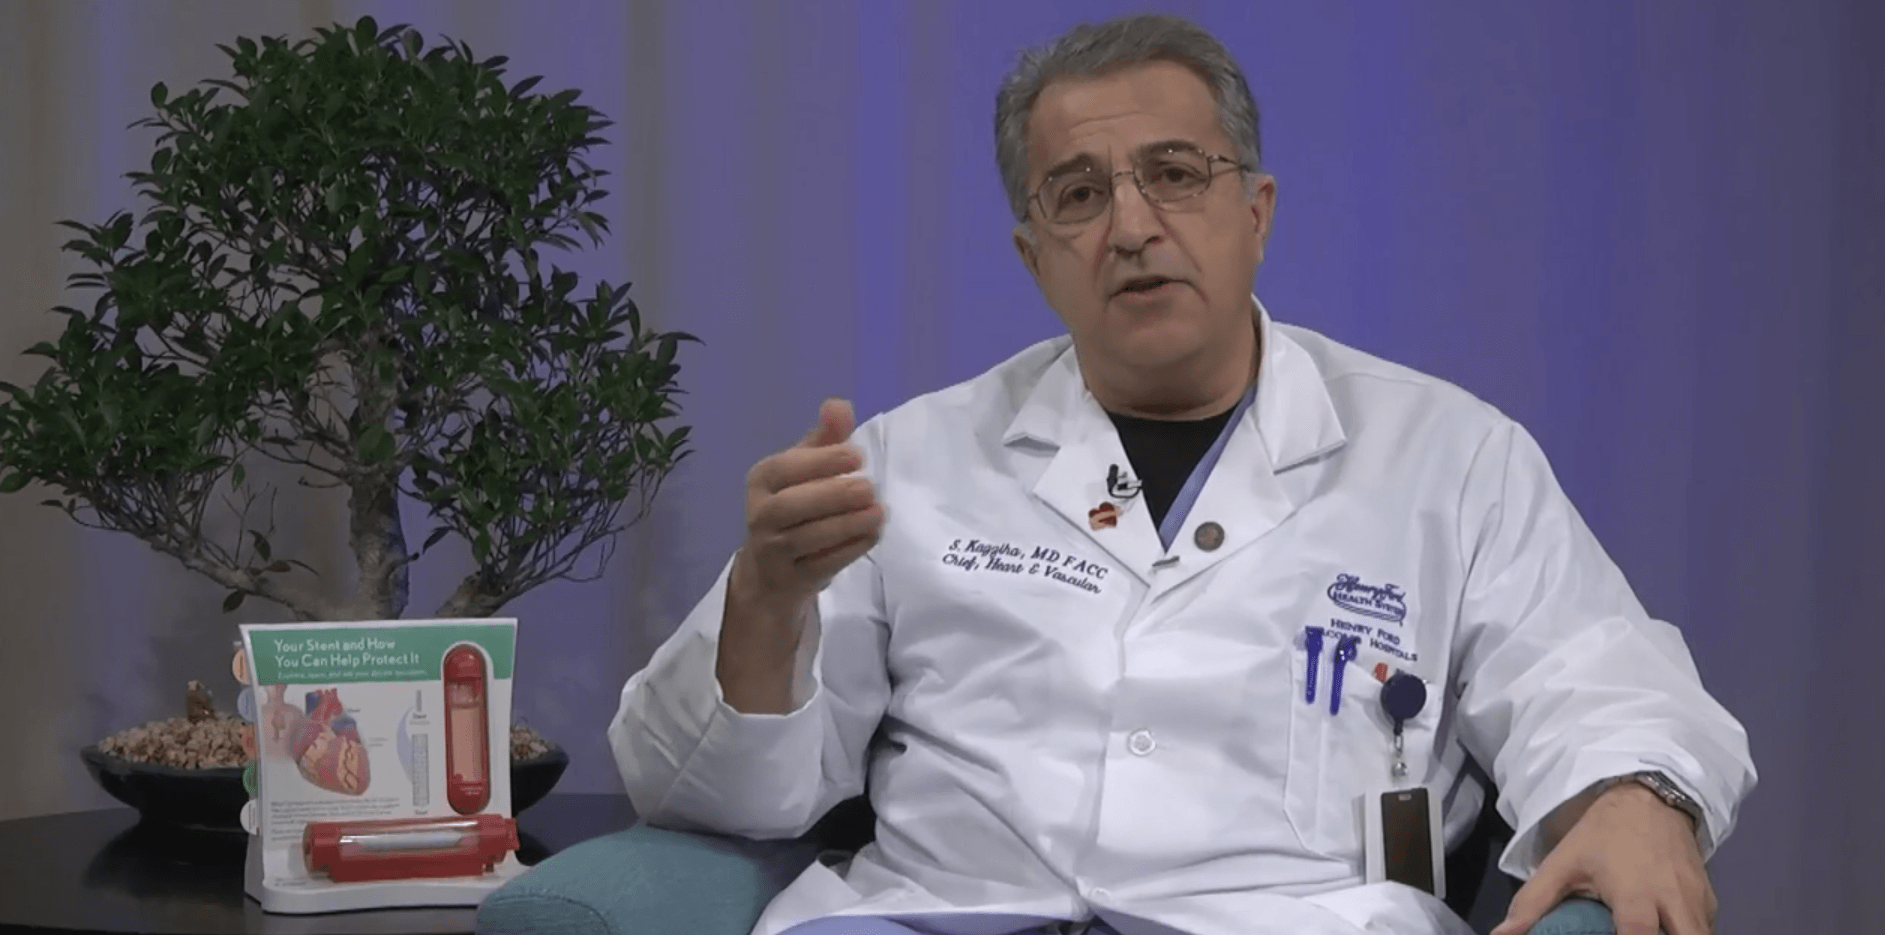 Heart Health Talk with dr. Kazziha